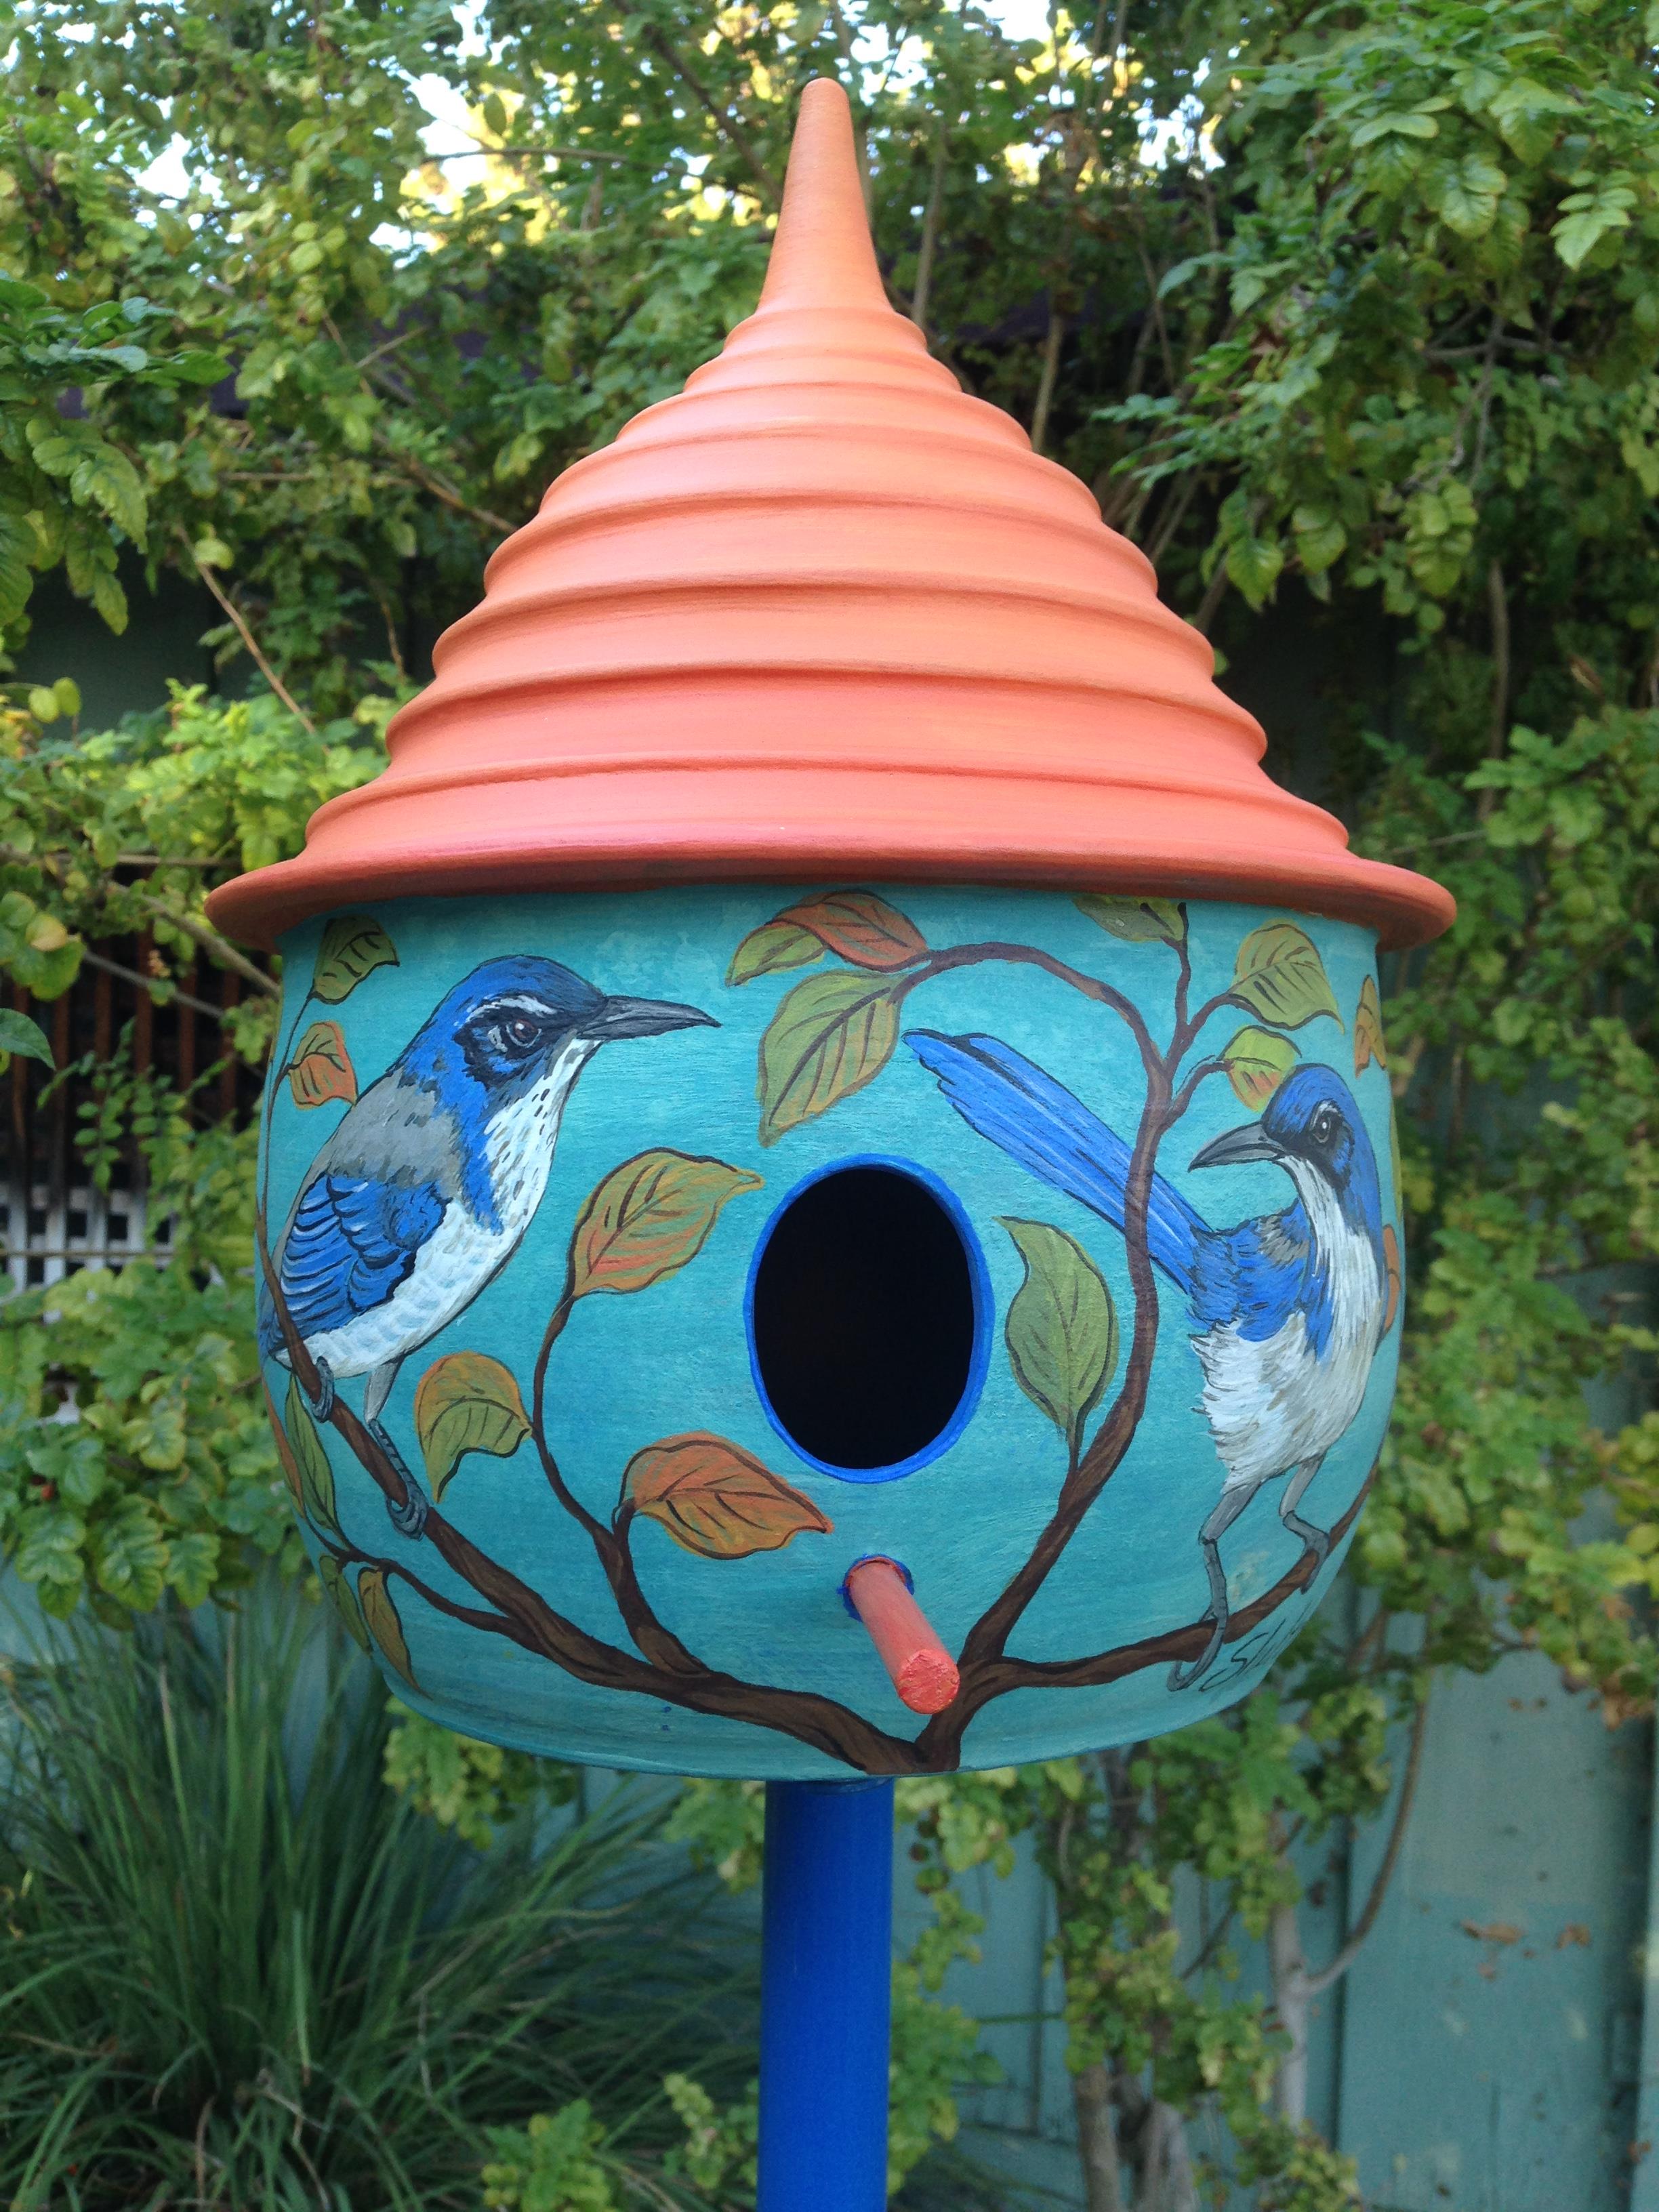 Colorful Ceramic Birdhouse with Scrubjay design